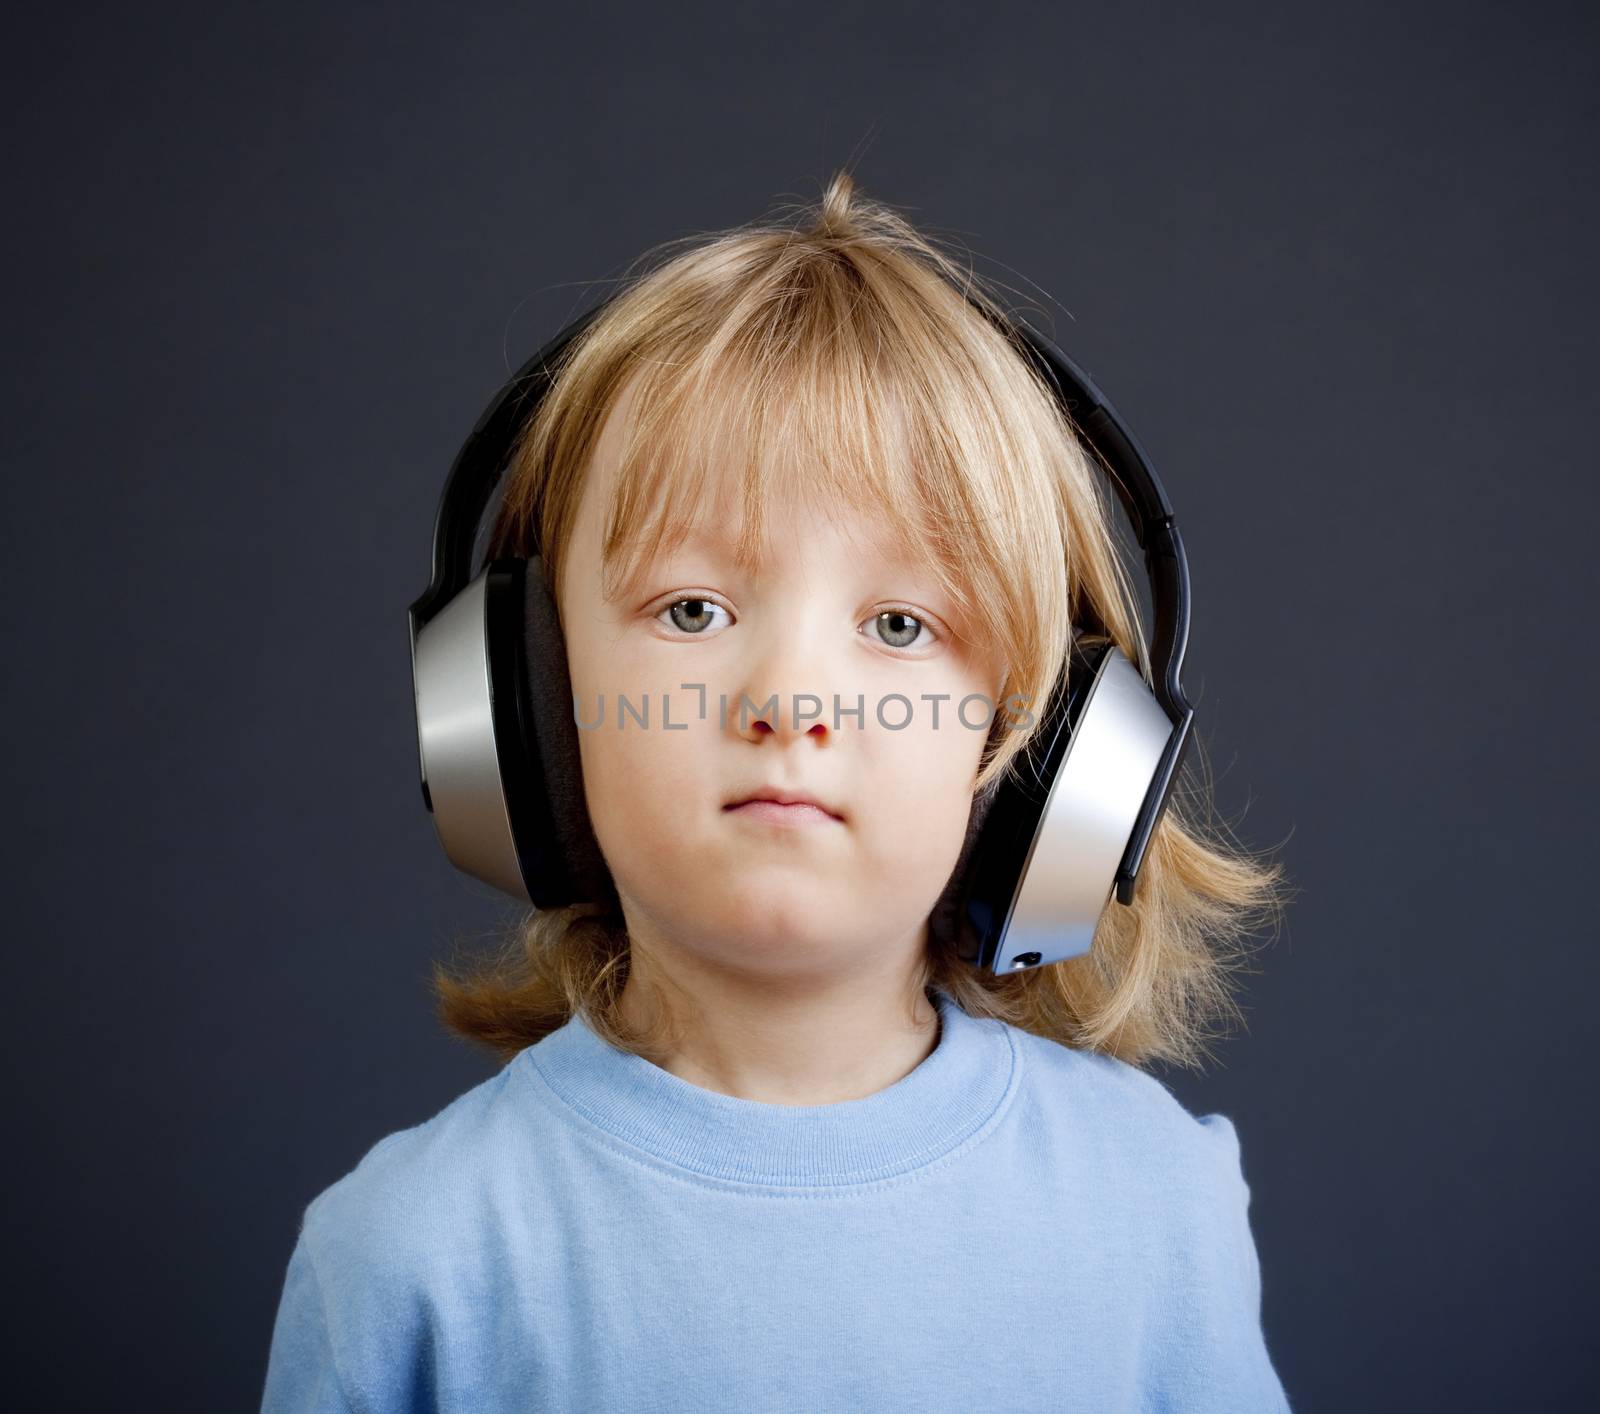 boy with headphones by courtyardpix